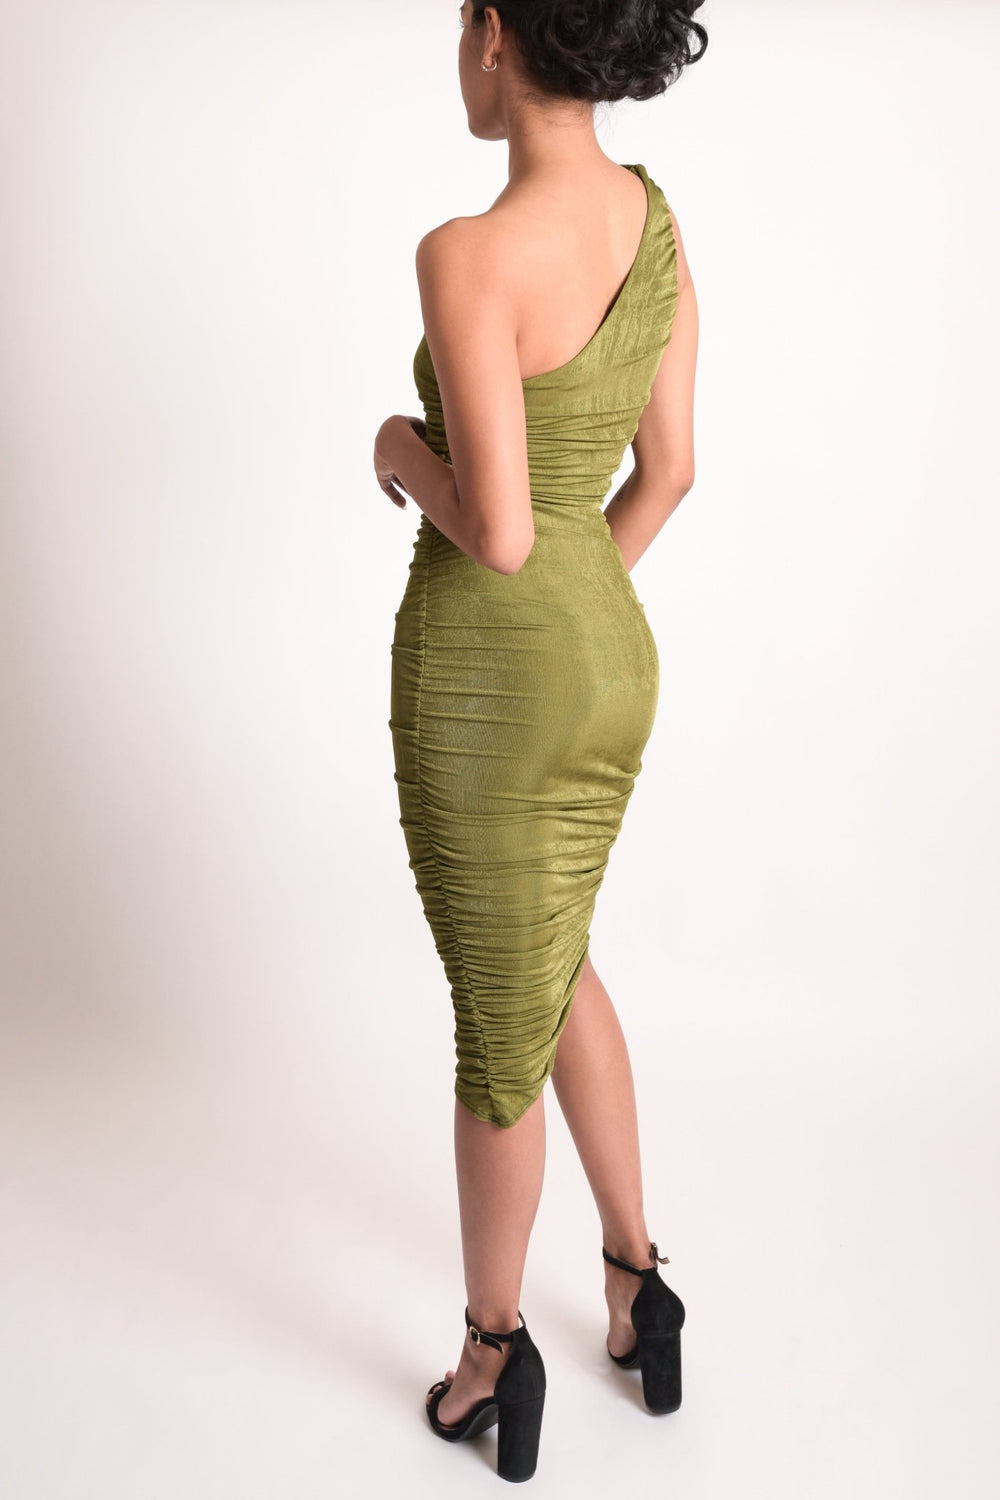 Deana - verde olivo - Lend the Trend renta de vestidos mexico